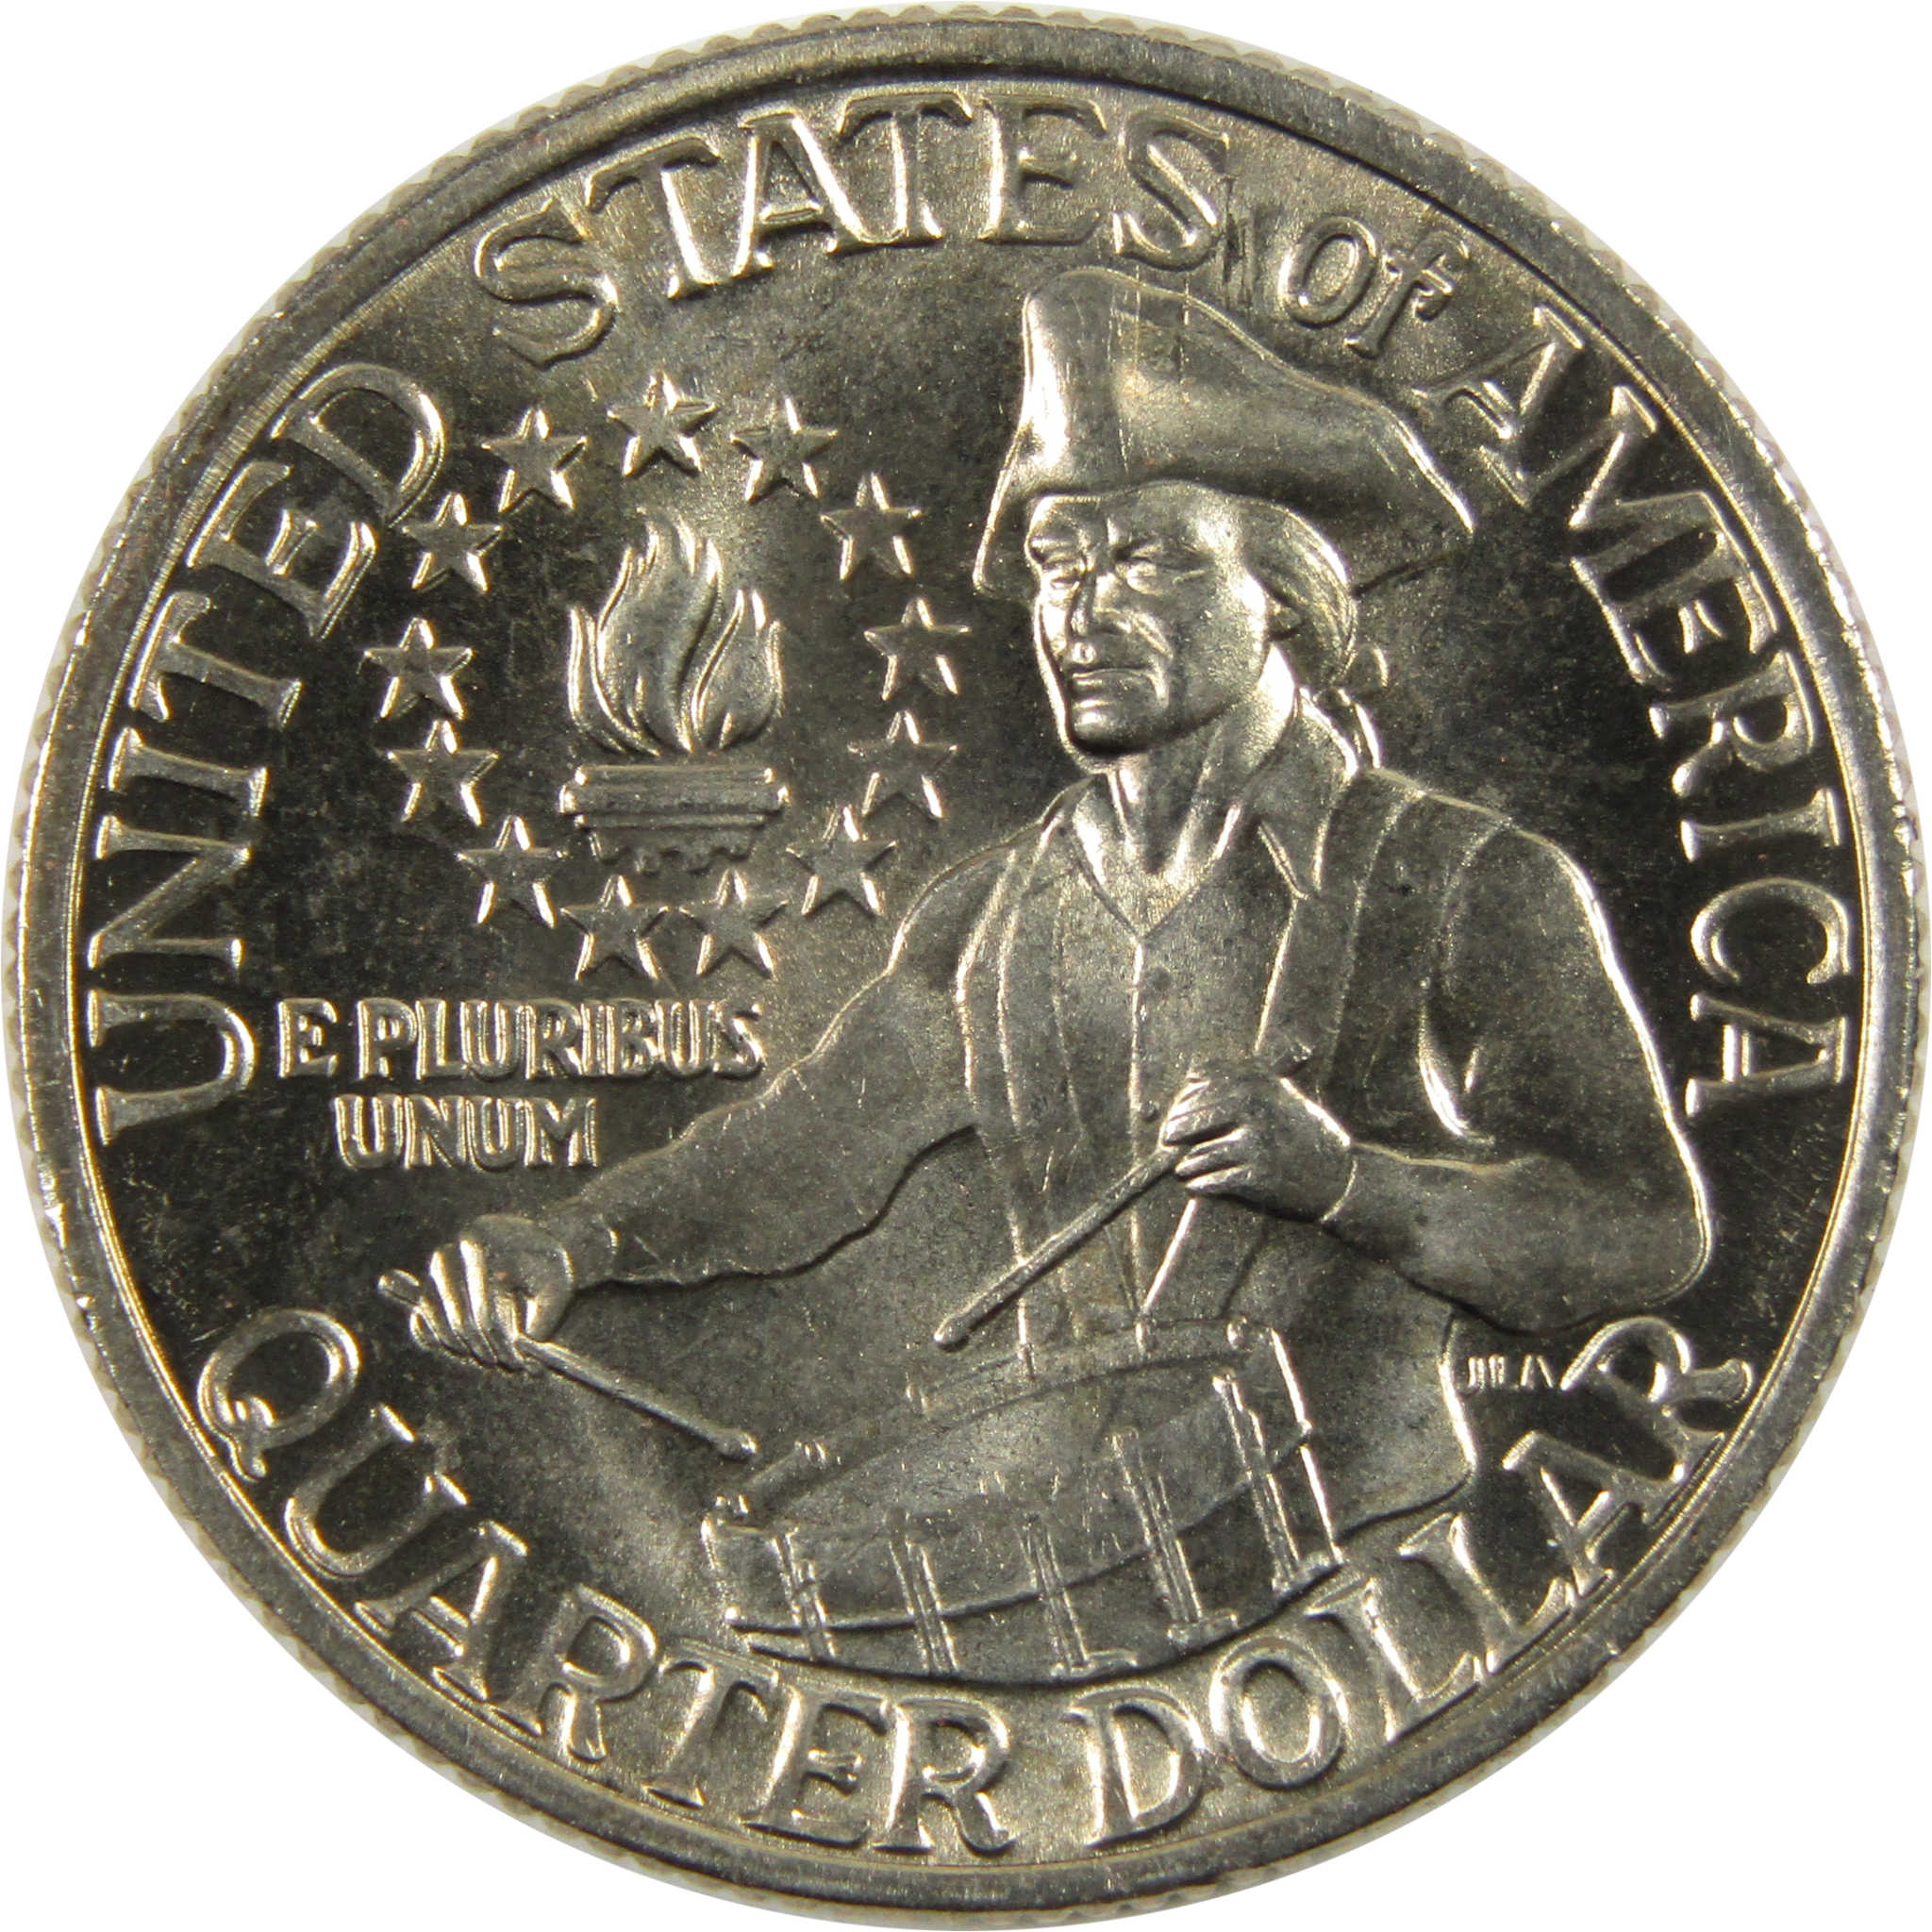 1976 Washington Bicentennial Quarter BU Uncirculated Clad 25c Coin